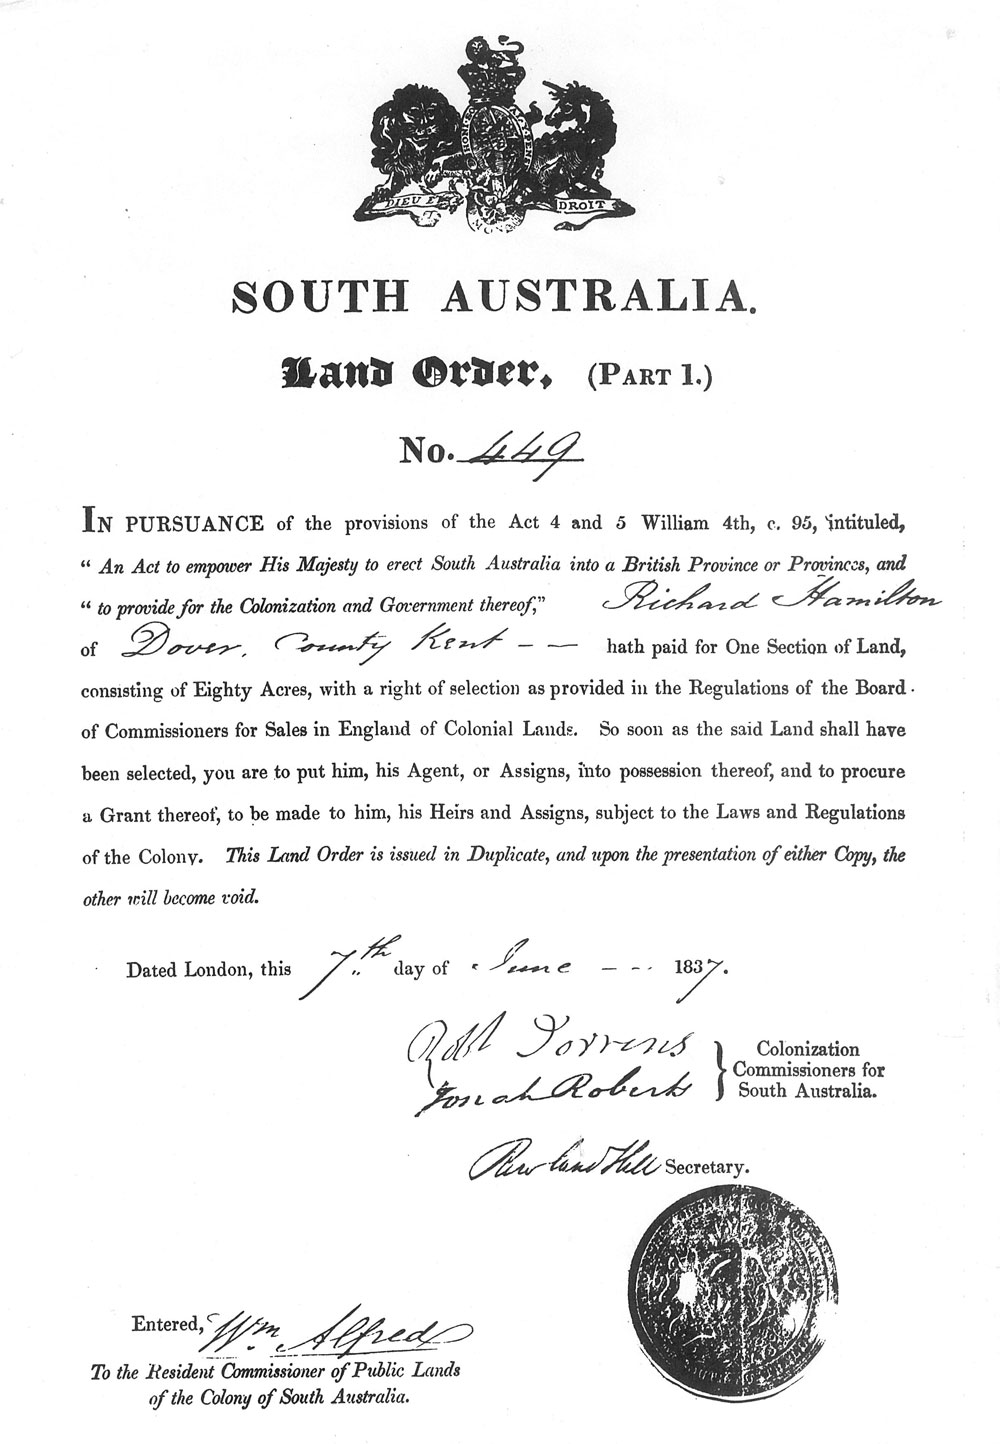 Richard-Hamilton-SA-Land-Order-1837